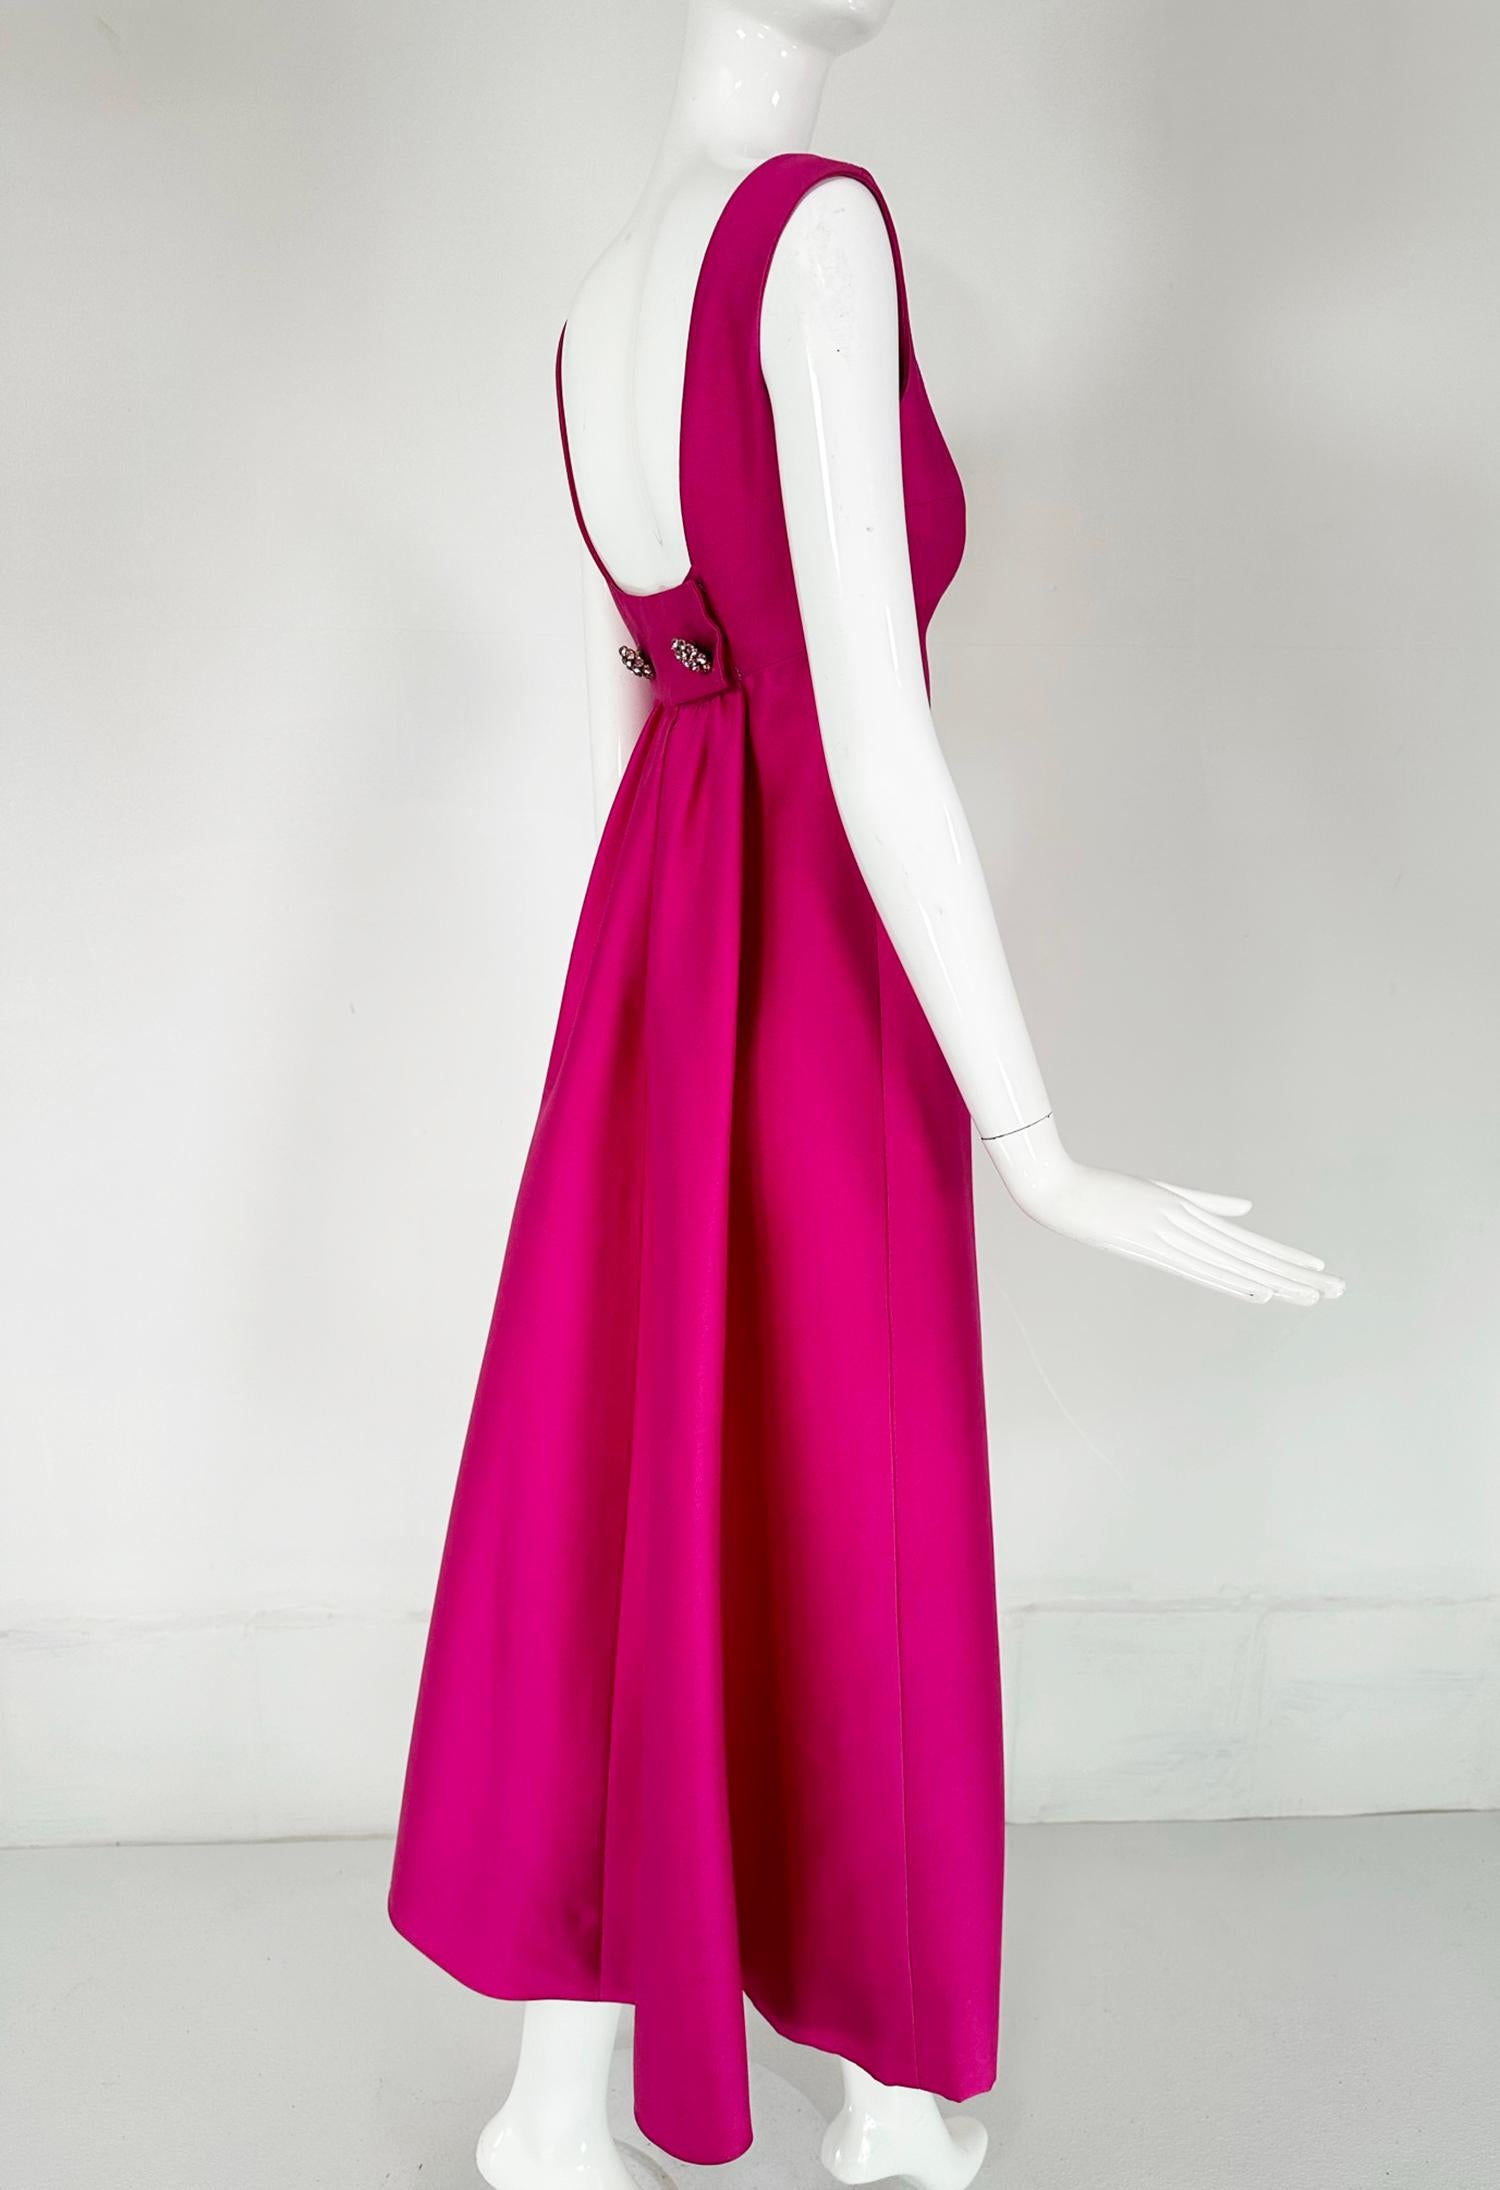 Women's Malcolm Starr Fuchsia Pink Silk Twill Evening Dress Early 1960s For Sale